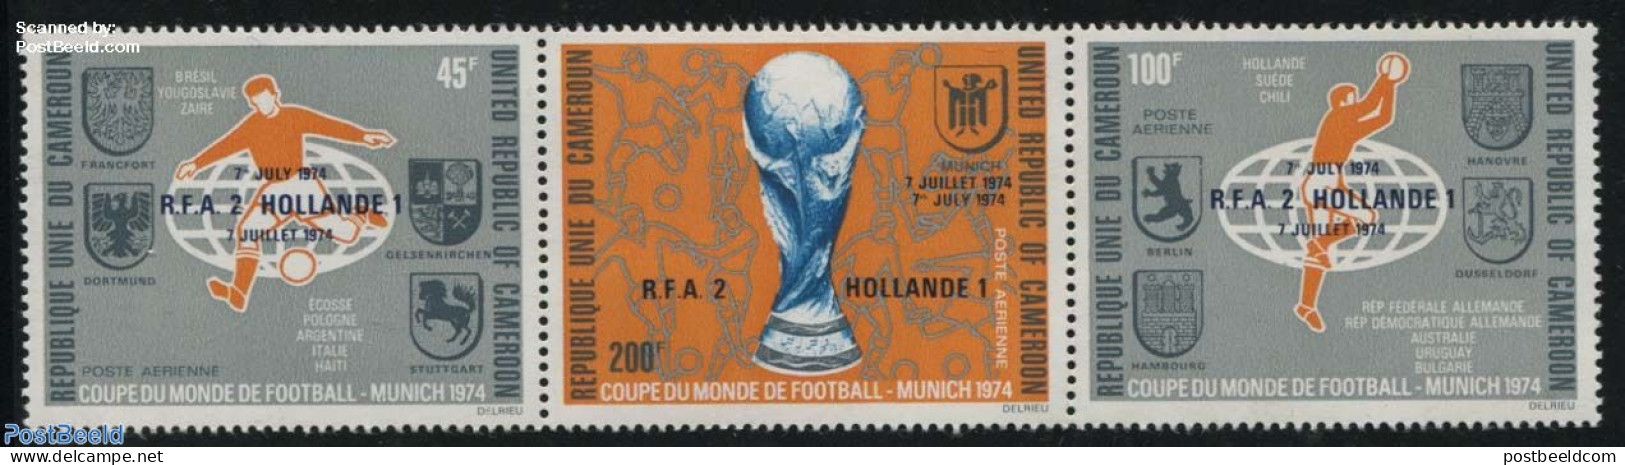 Cameroon 1974 Football Winners 3v [::], Mint NH, History - Sport - Netherlands & Dutch - Football - Geografía